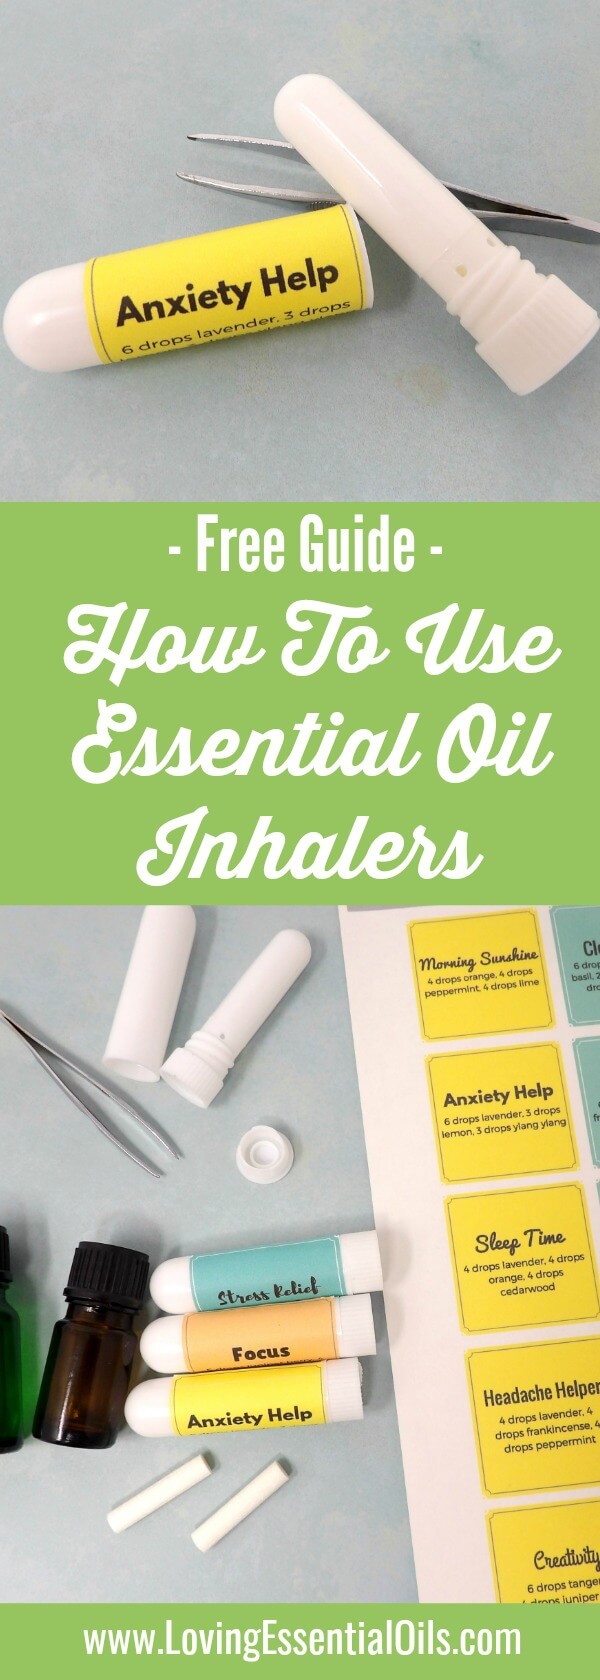 Essential Oil Inhaler Recipes For Stress by Loving Essential Oils